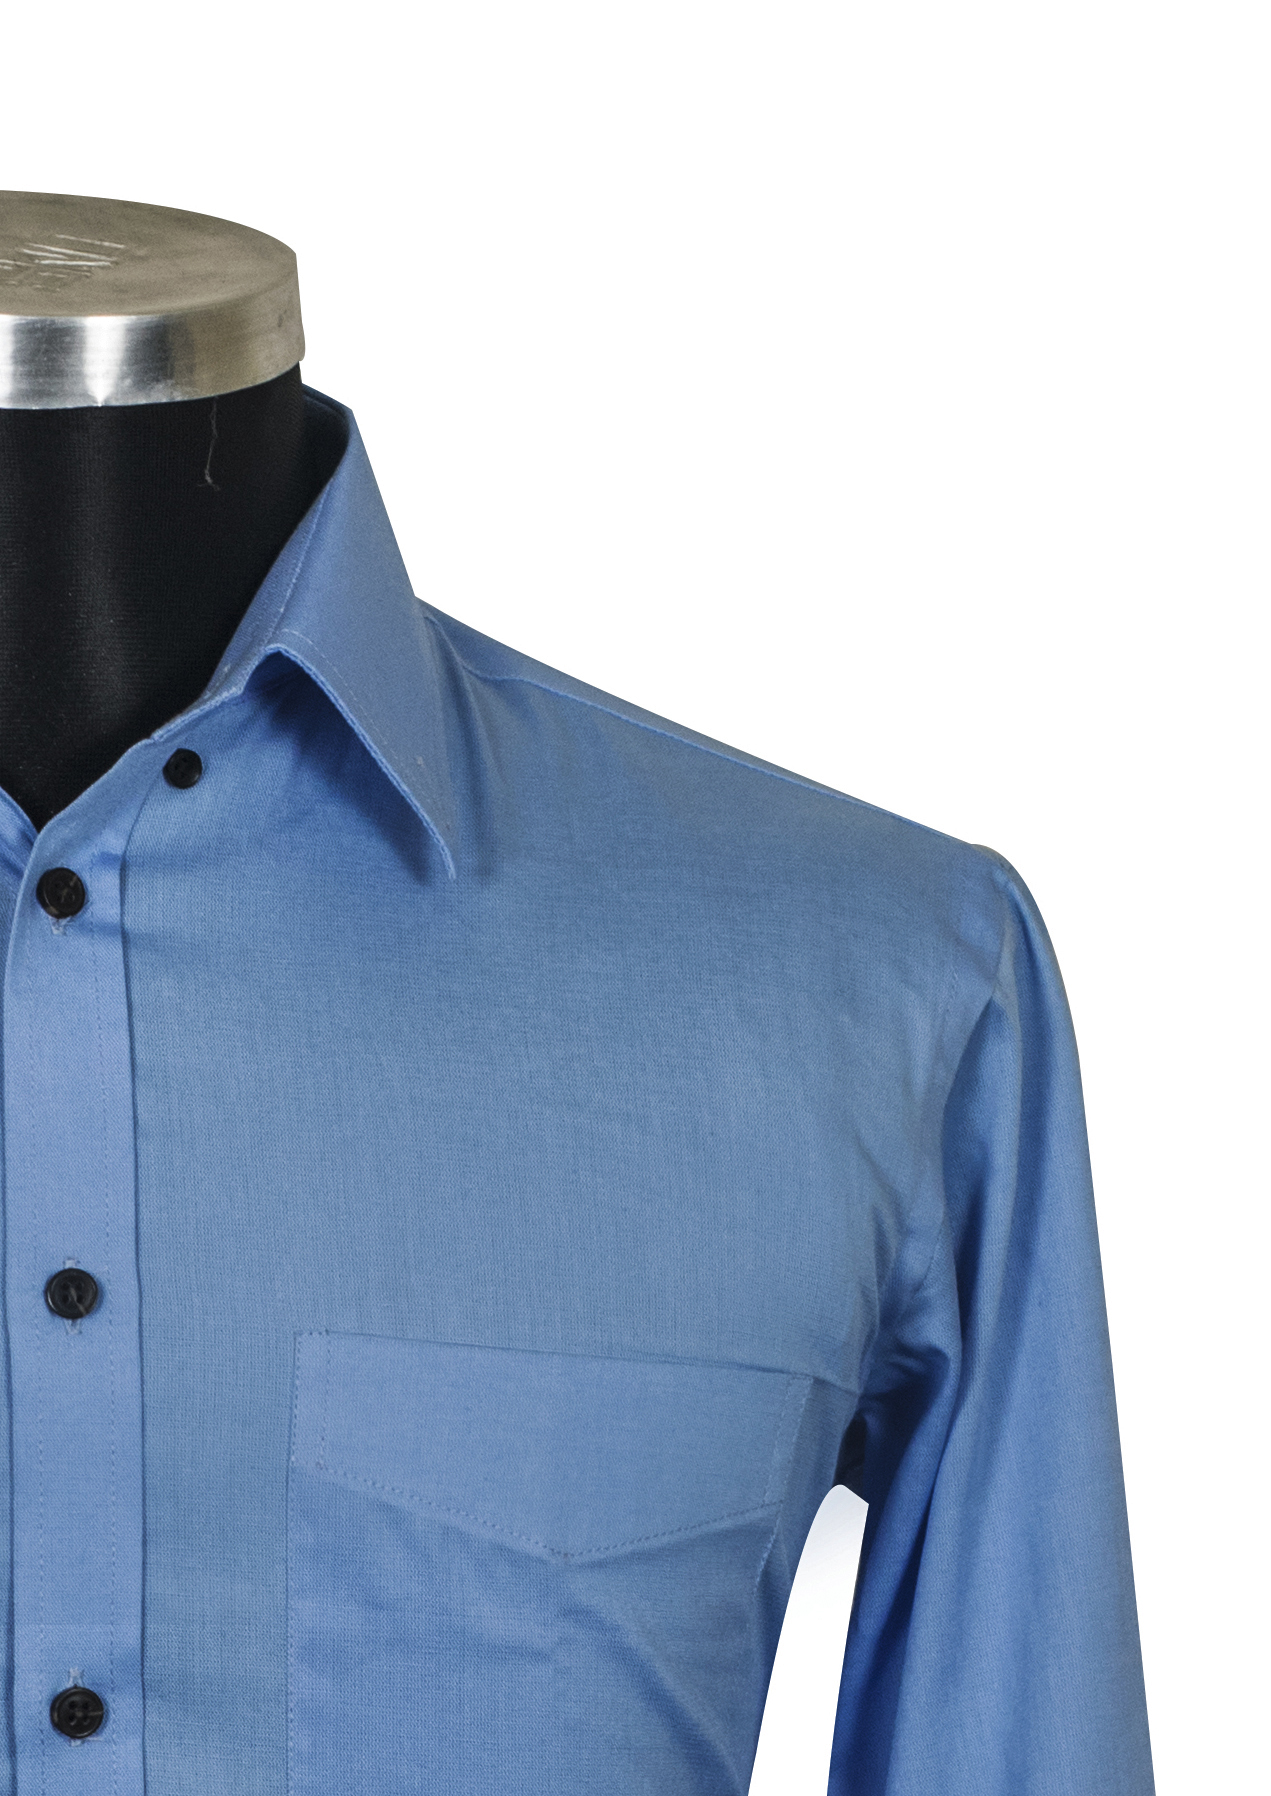 Herringbone Sky Color 60s Mod Shirt Long Sleeve